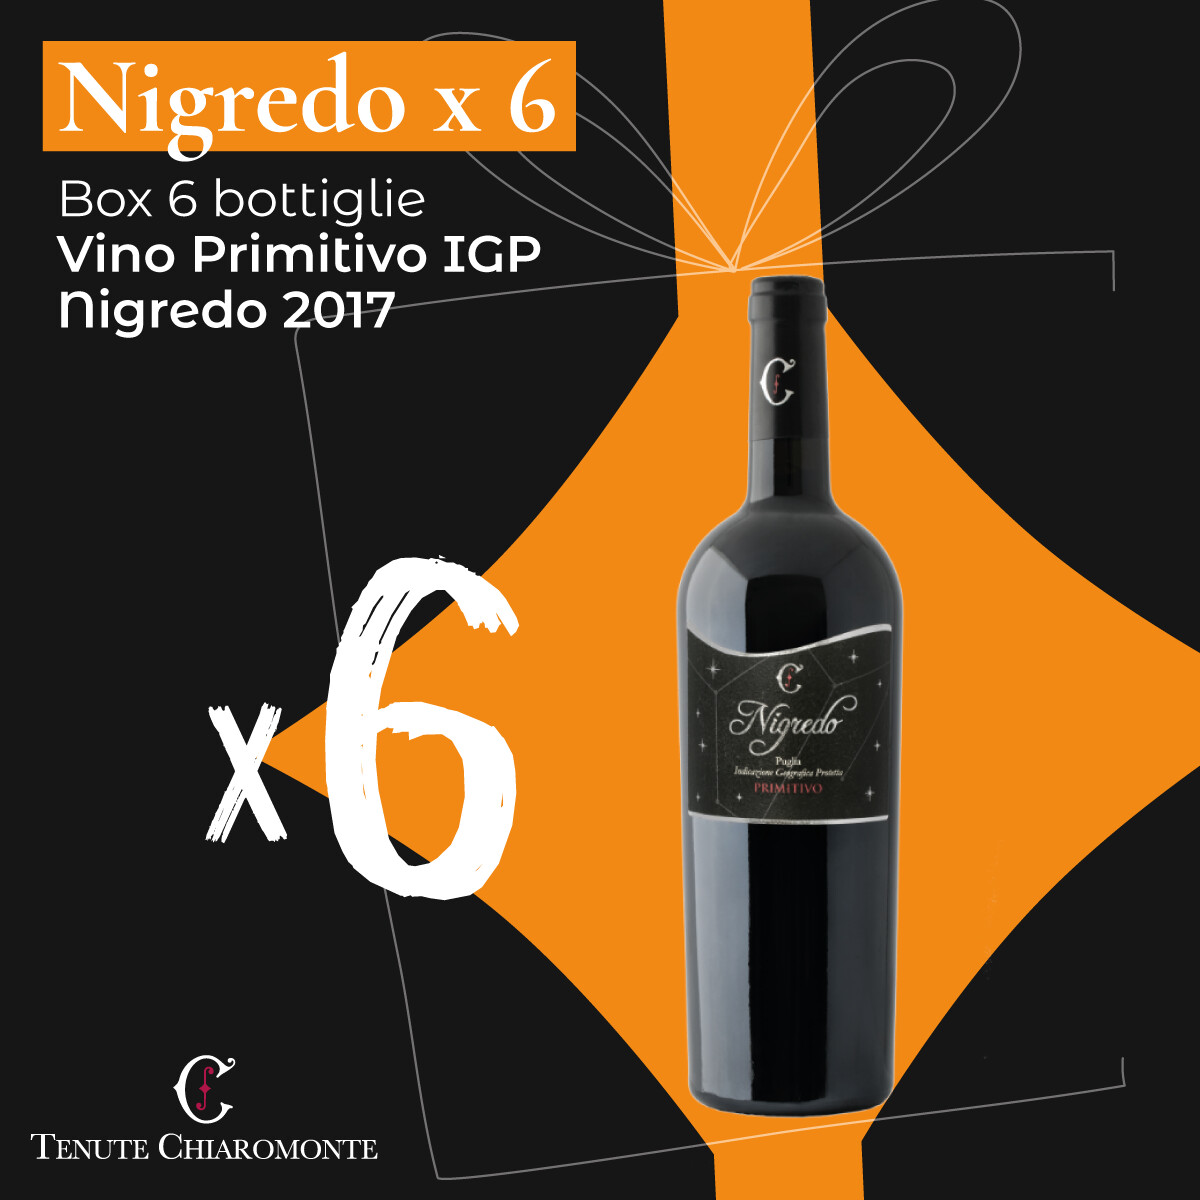 6 bottiglie: vino Primitivo IGP Nigredo 2017